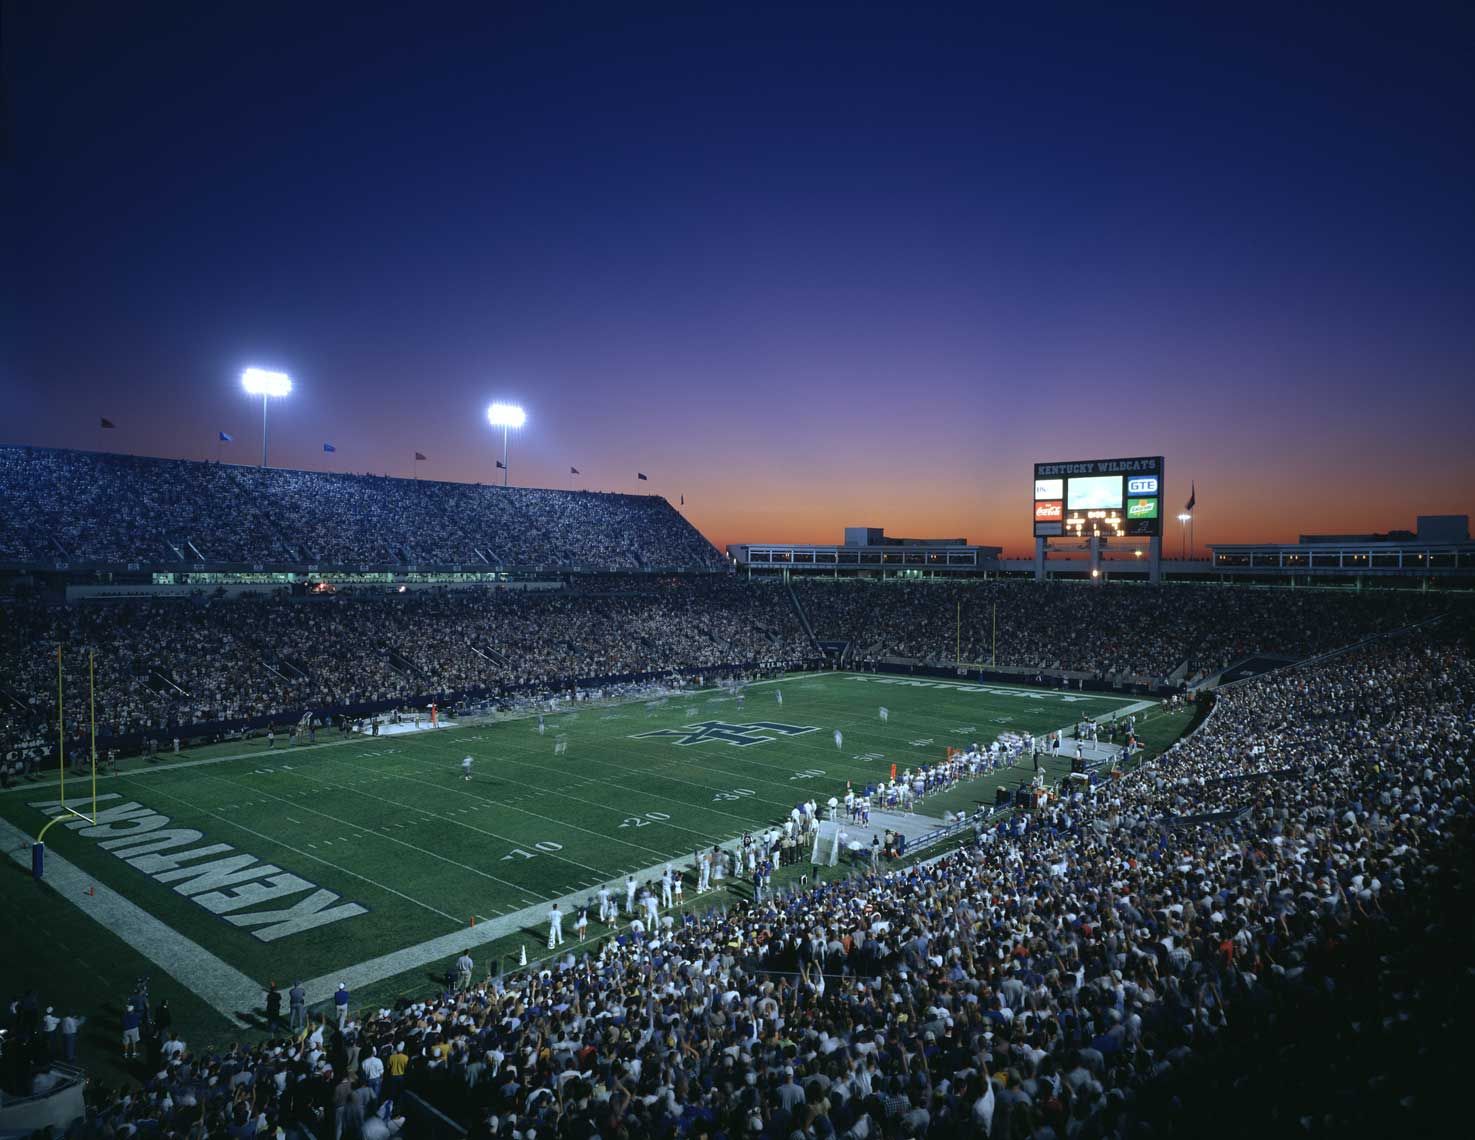 Nighttime view of the University of Kentucky Commonwealth Stadium